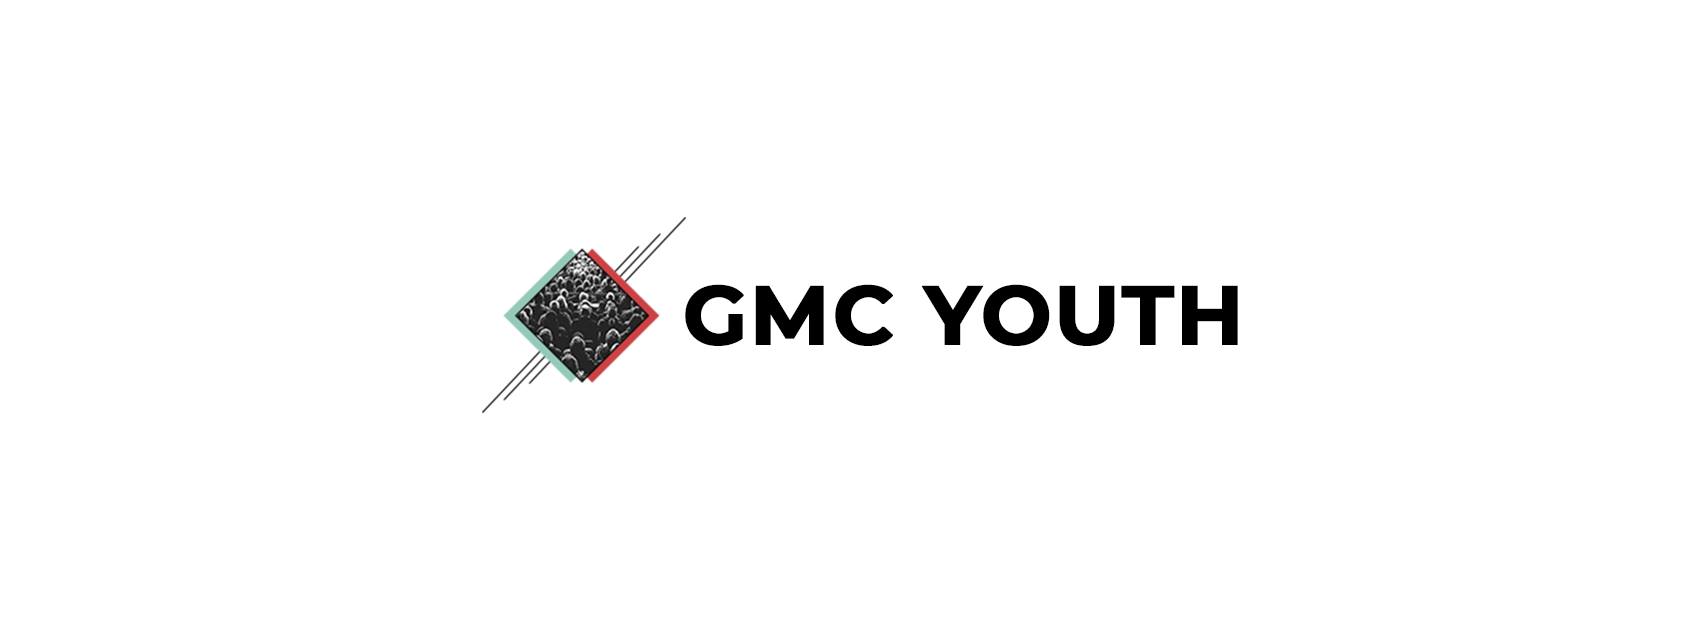 GMC youth logo